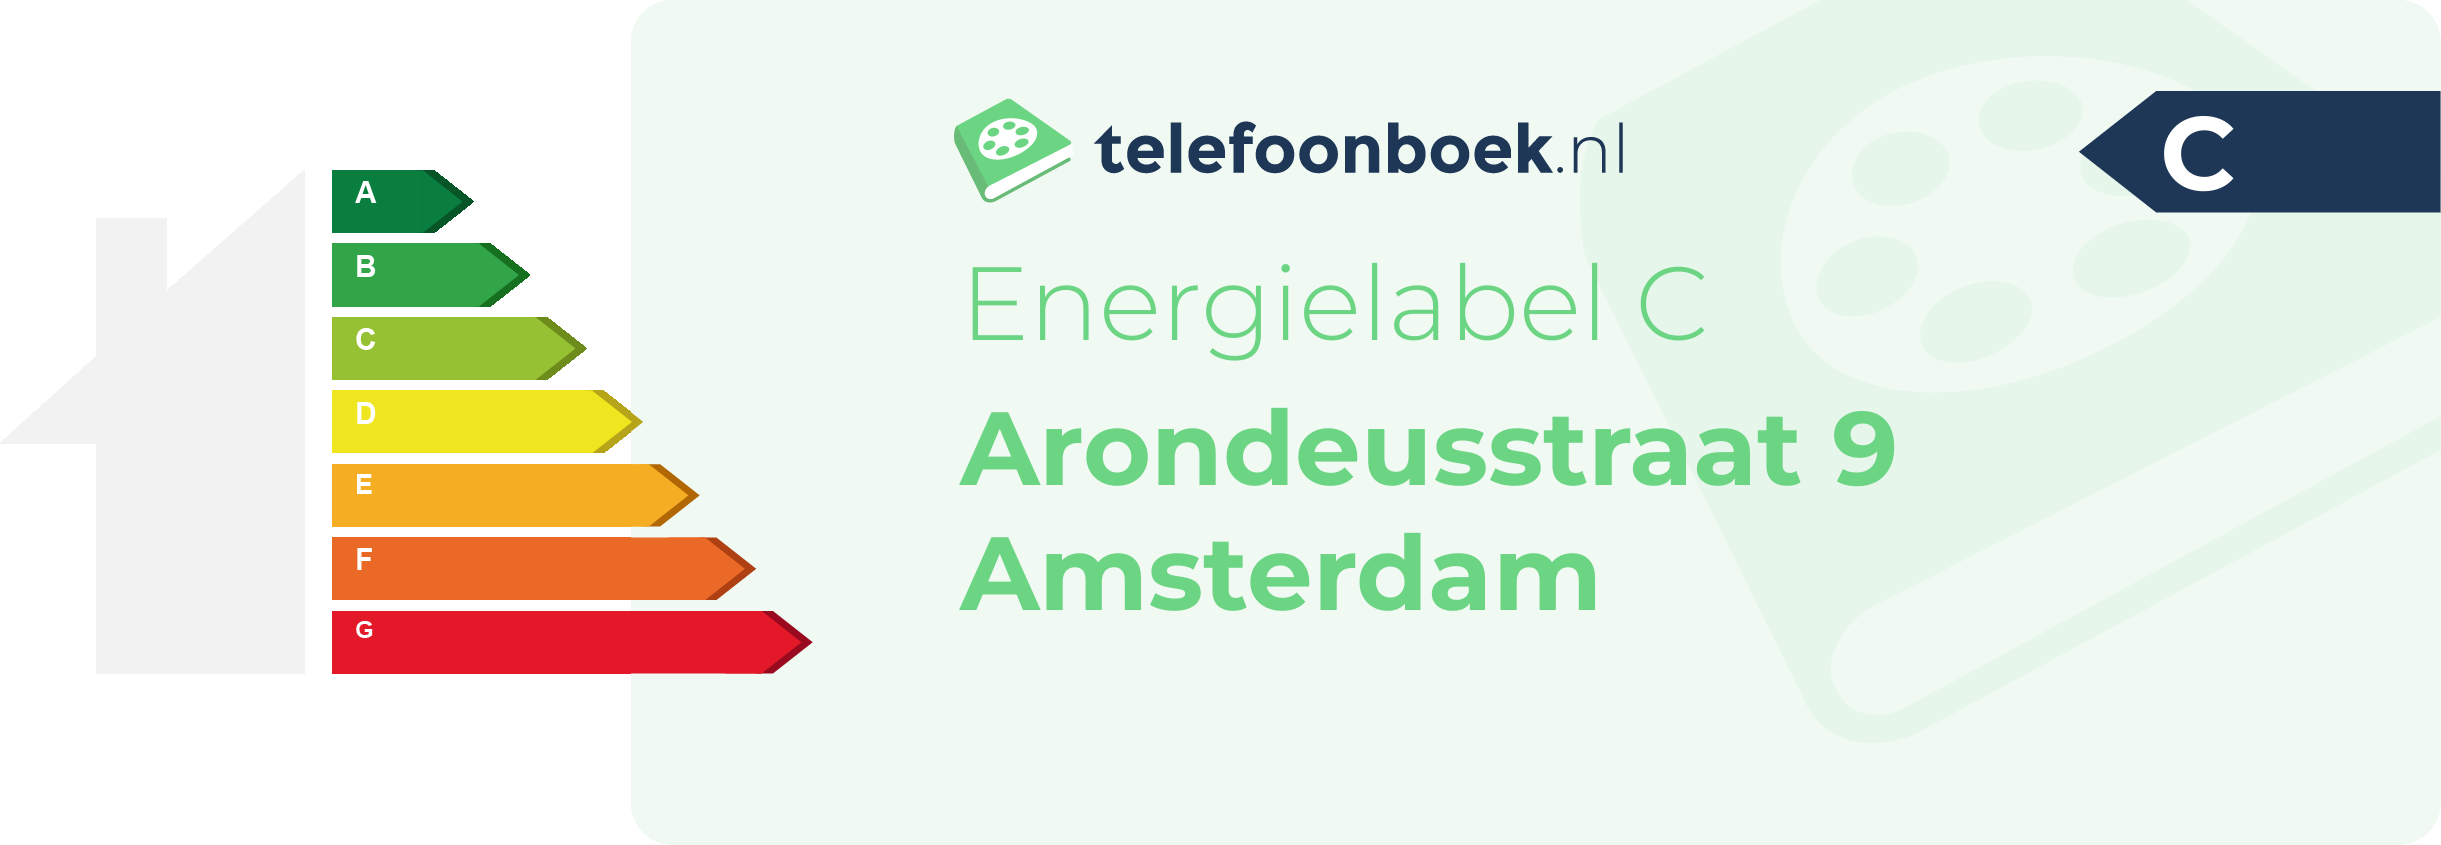 Energielabel Arondeusstraat 9 Amsterdam